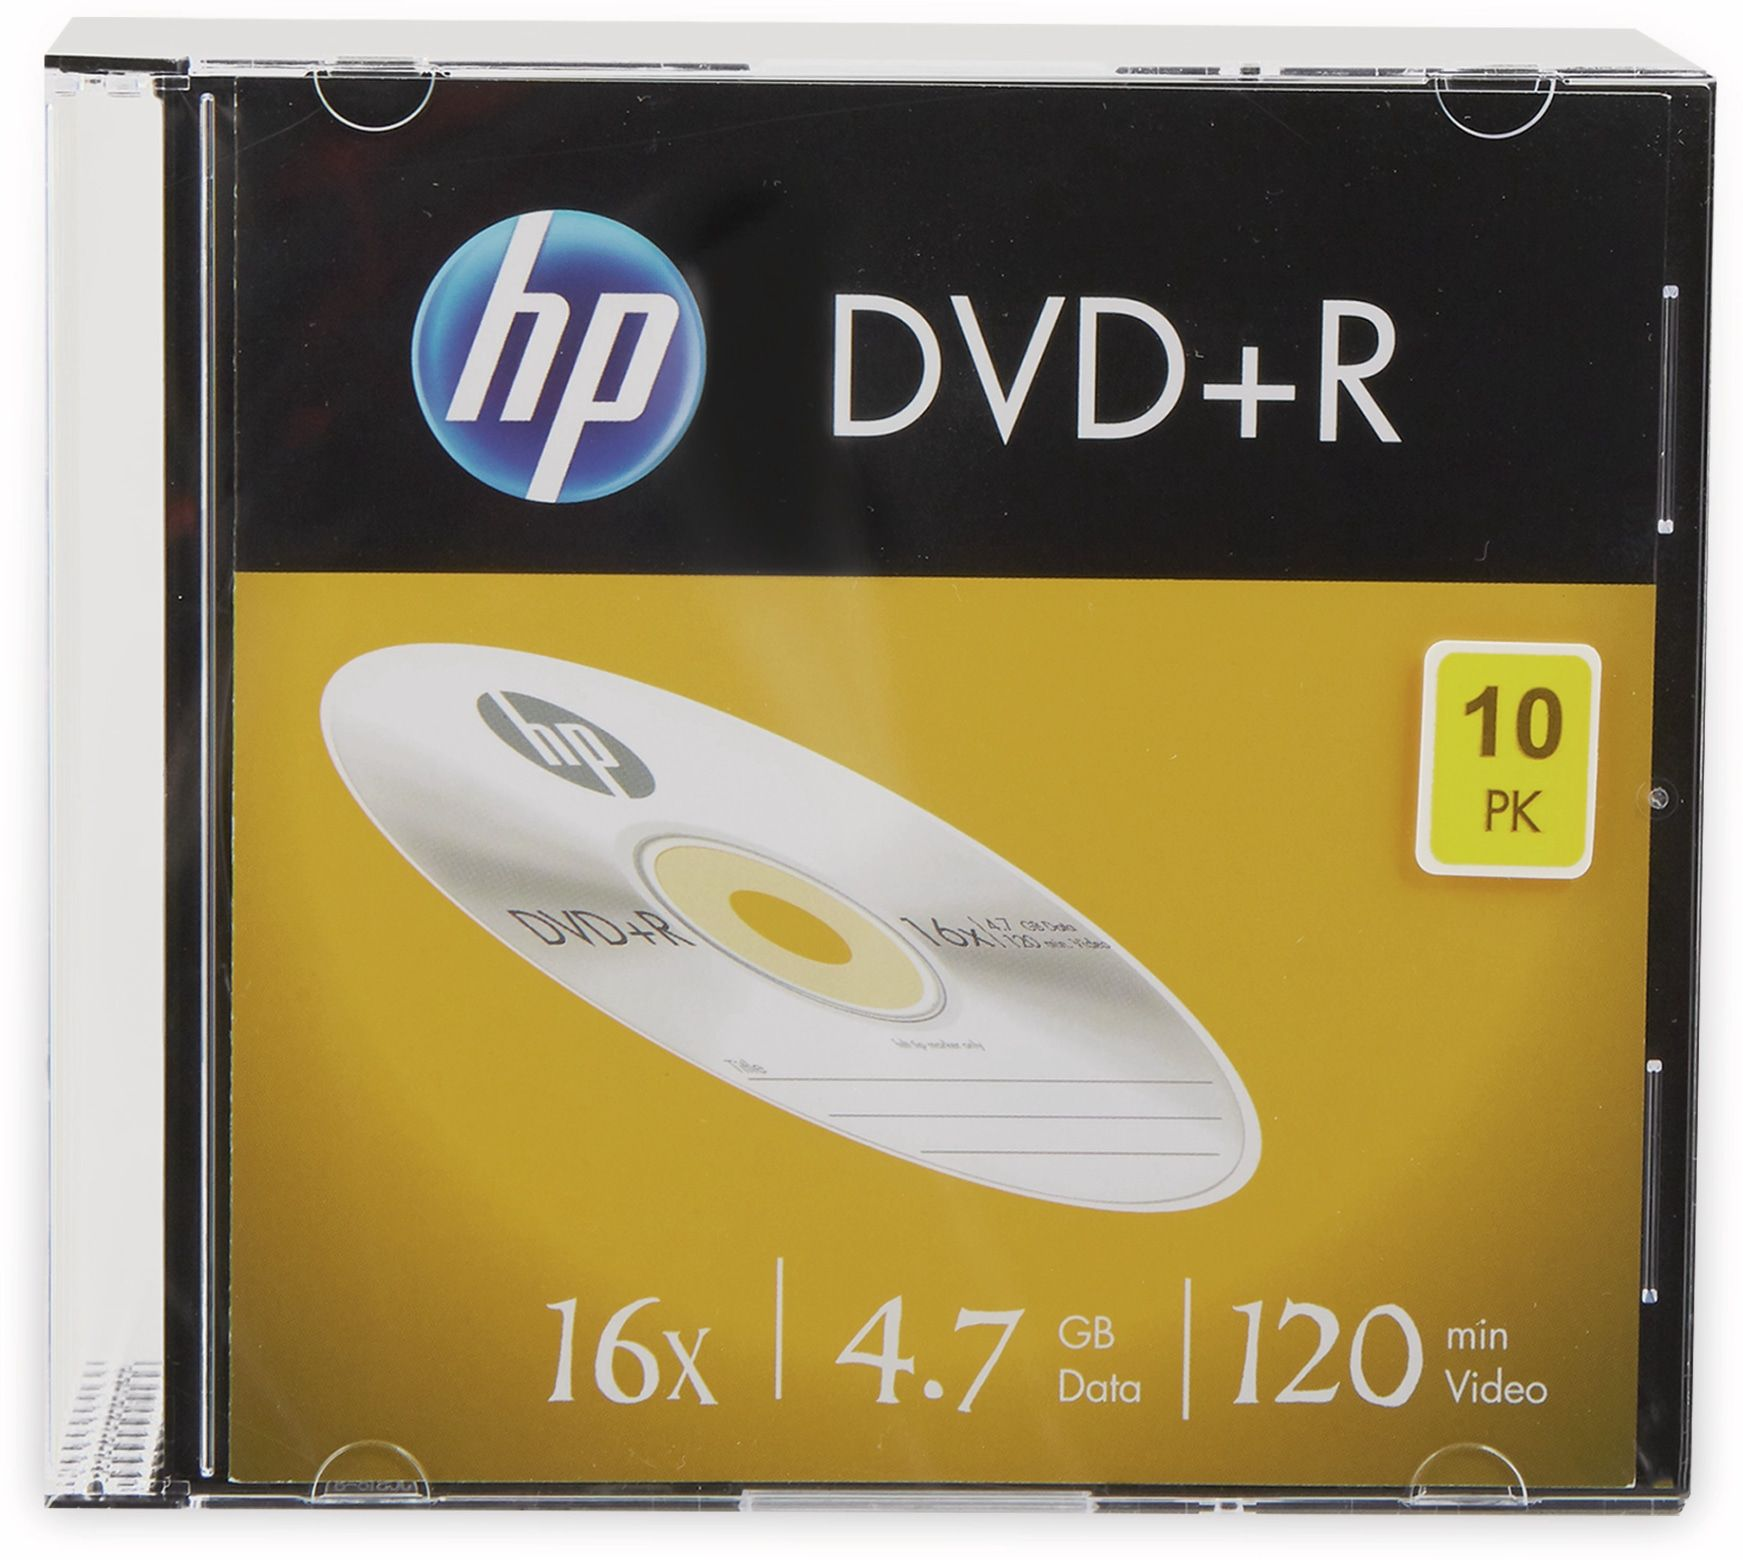 DVD+R 120Min, DVD+R 10 4.7GB, 16x, HP Slimcase, CDs